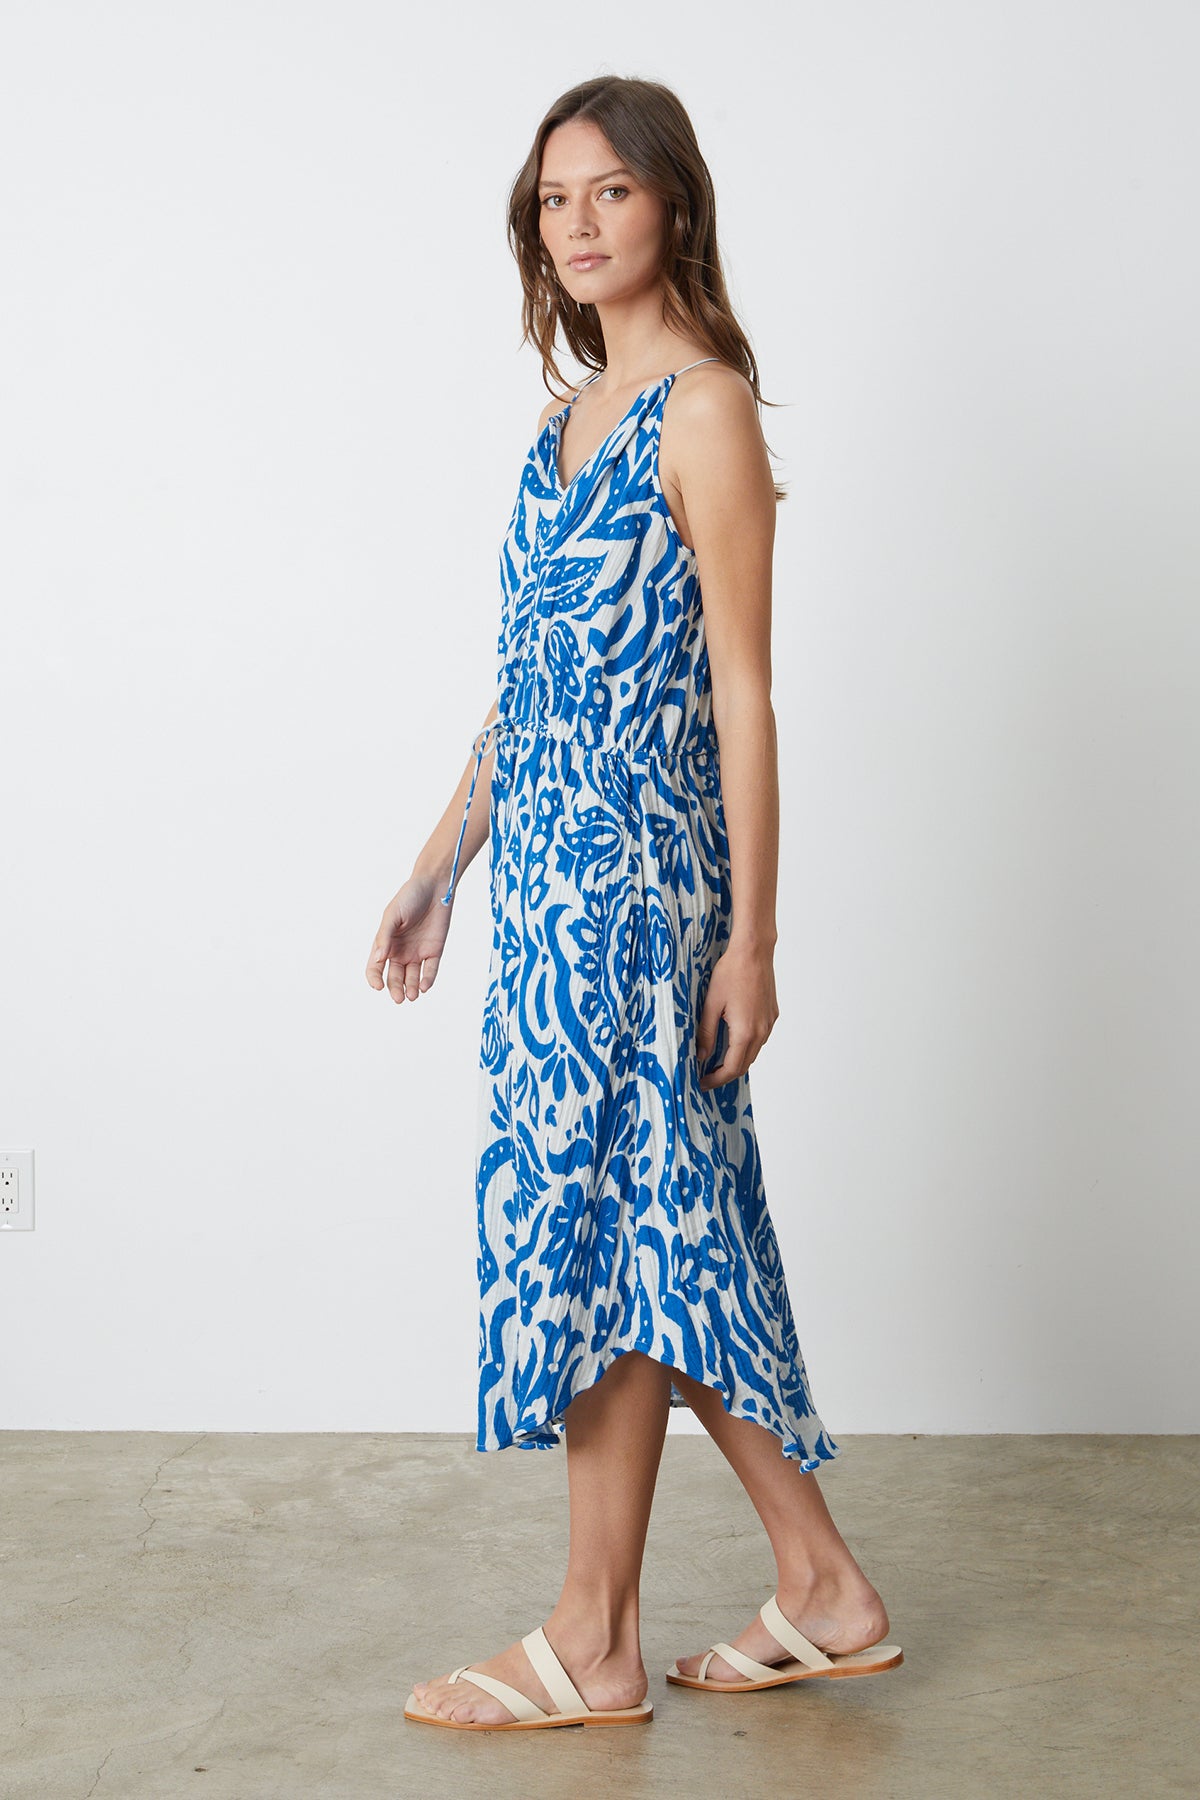 a model wearing a Velvet by Graham & Spencer Sasha Printed Cotton Gauze Dress.-26342721061057